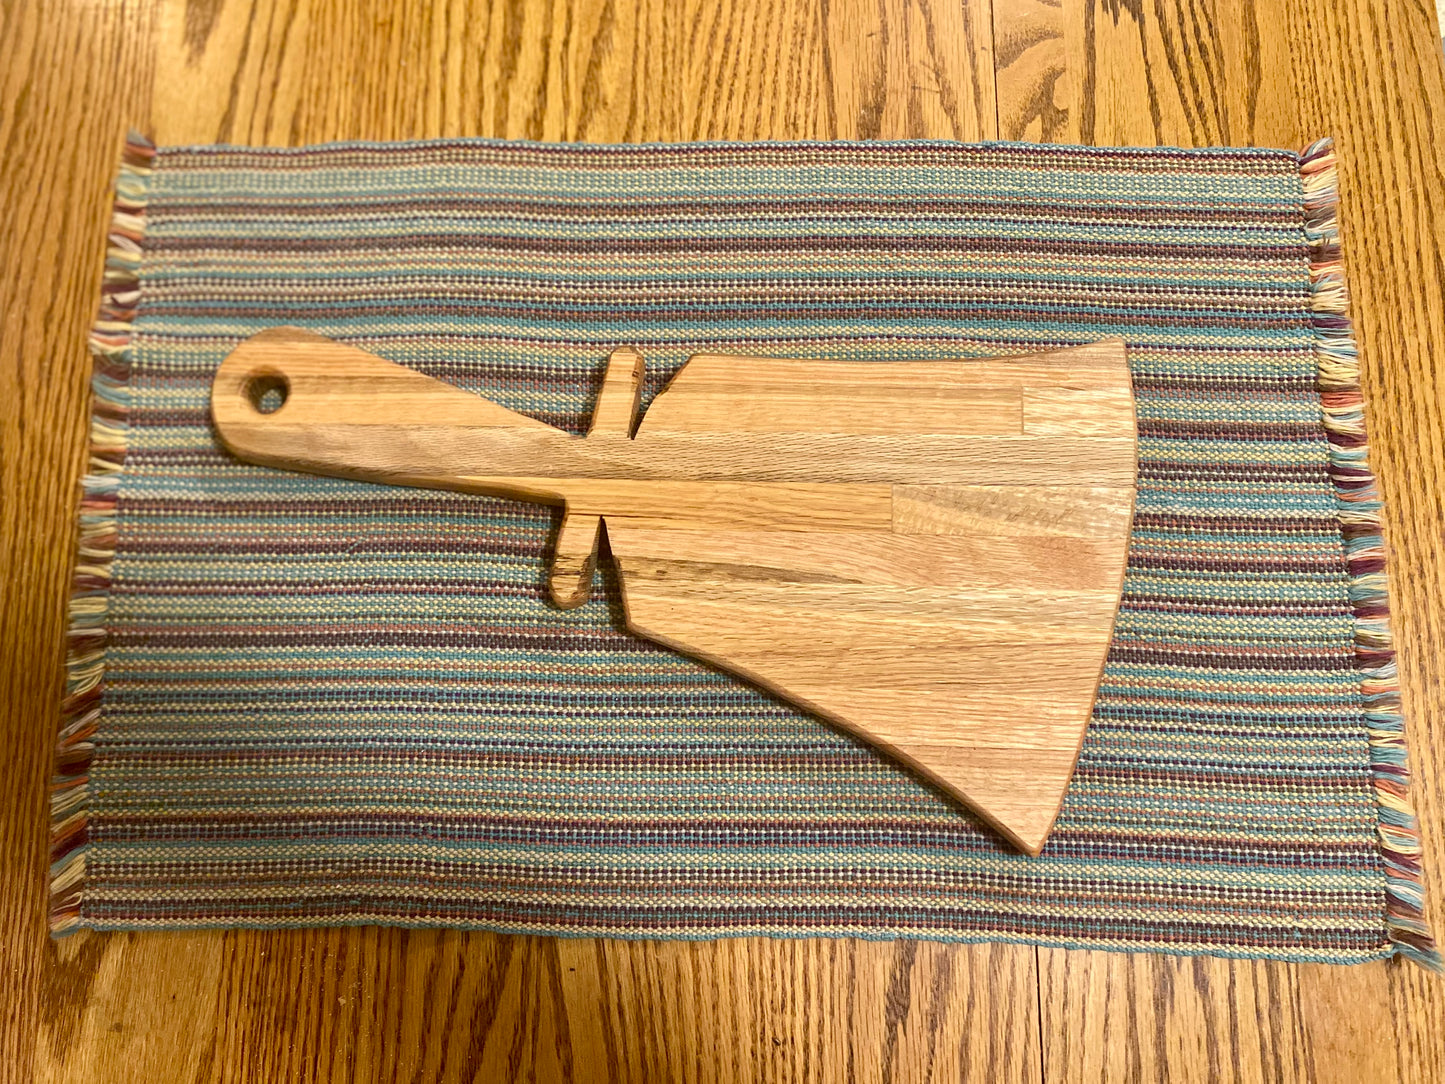 Handbell-shaped Cutting Board - Wood, Oak